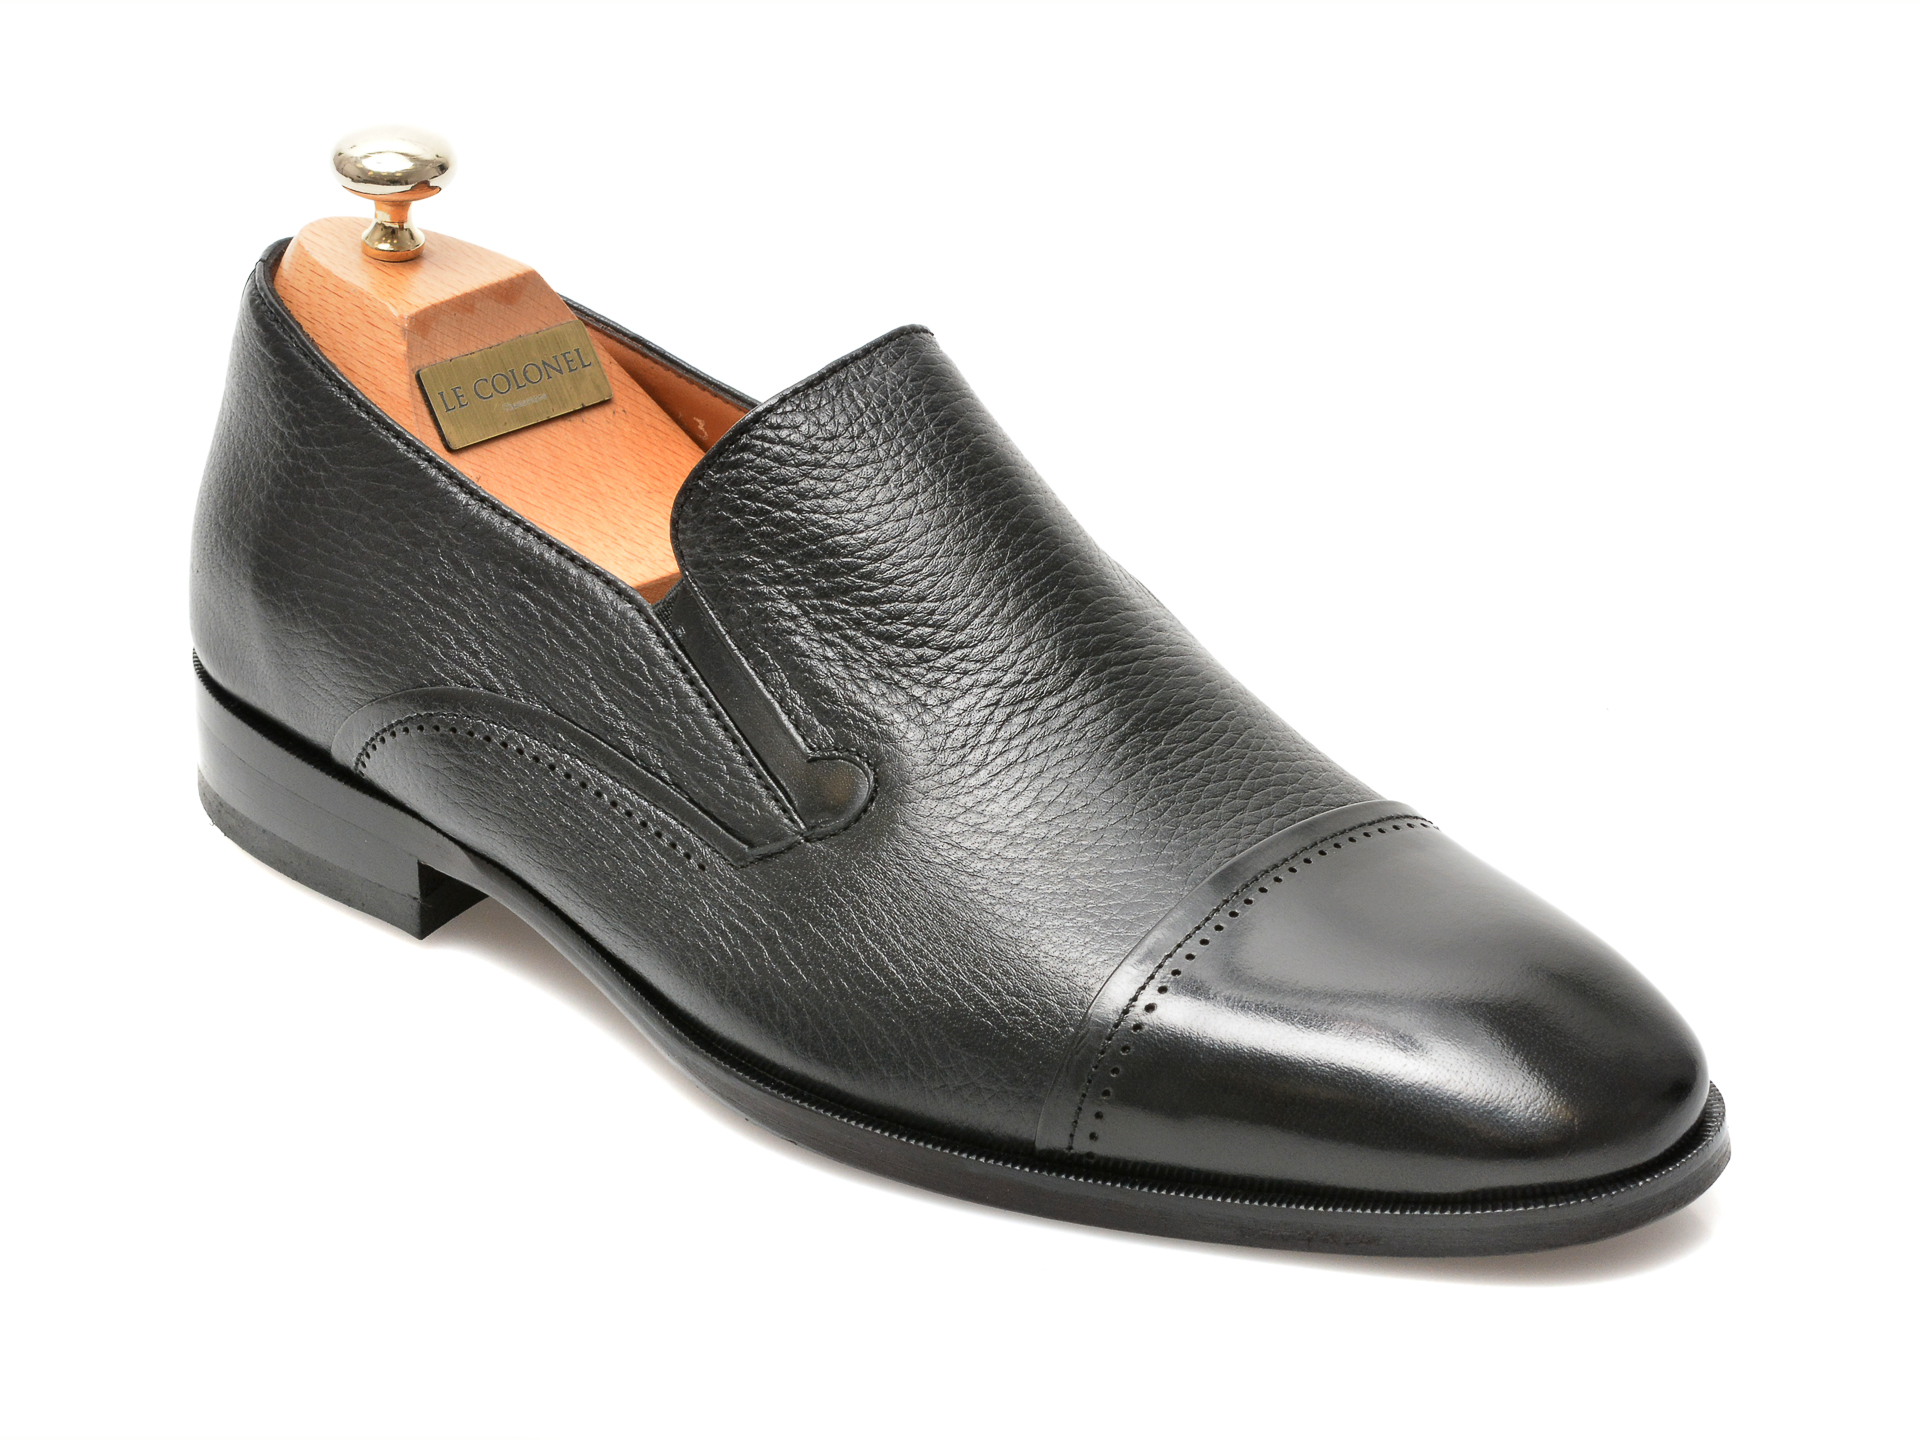 Pantofi LE COLONEL negri, 48765, din piele naturala /barbati/pantofi